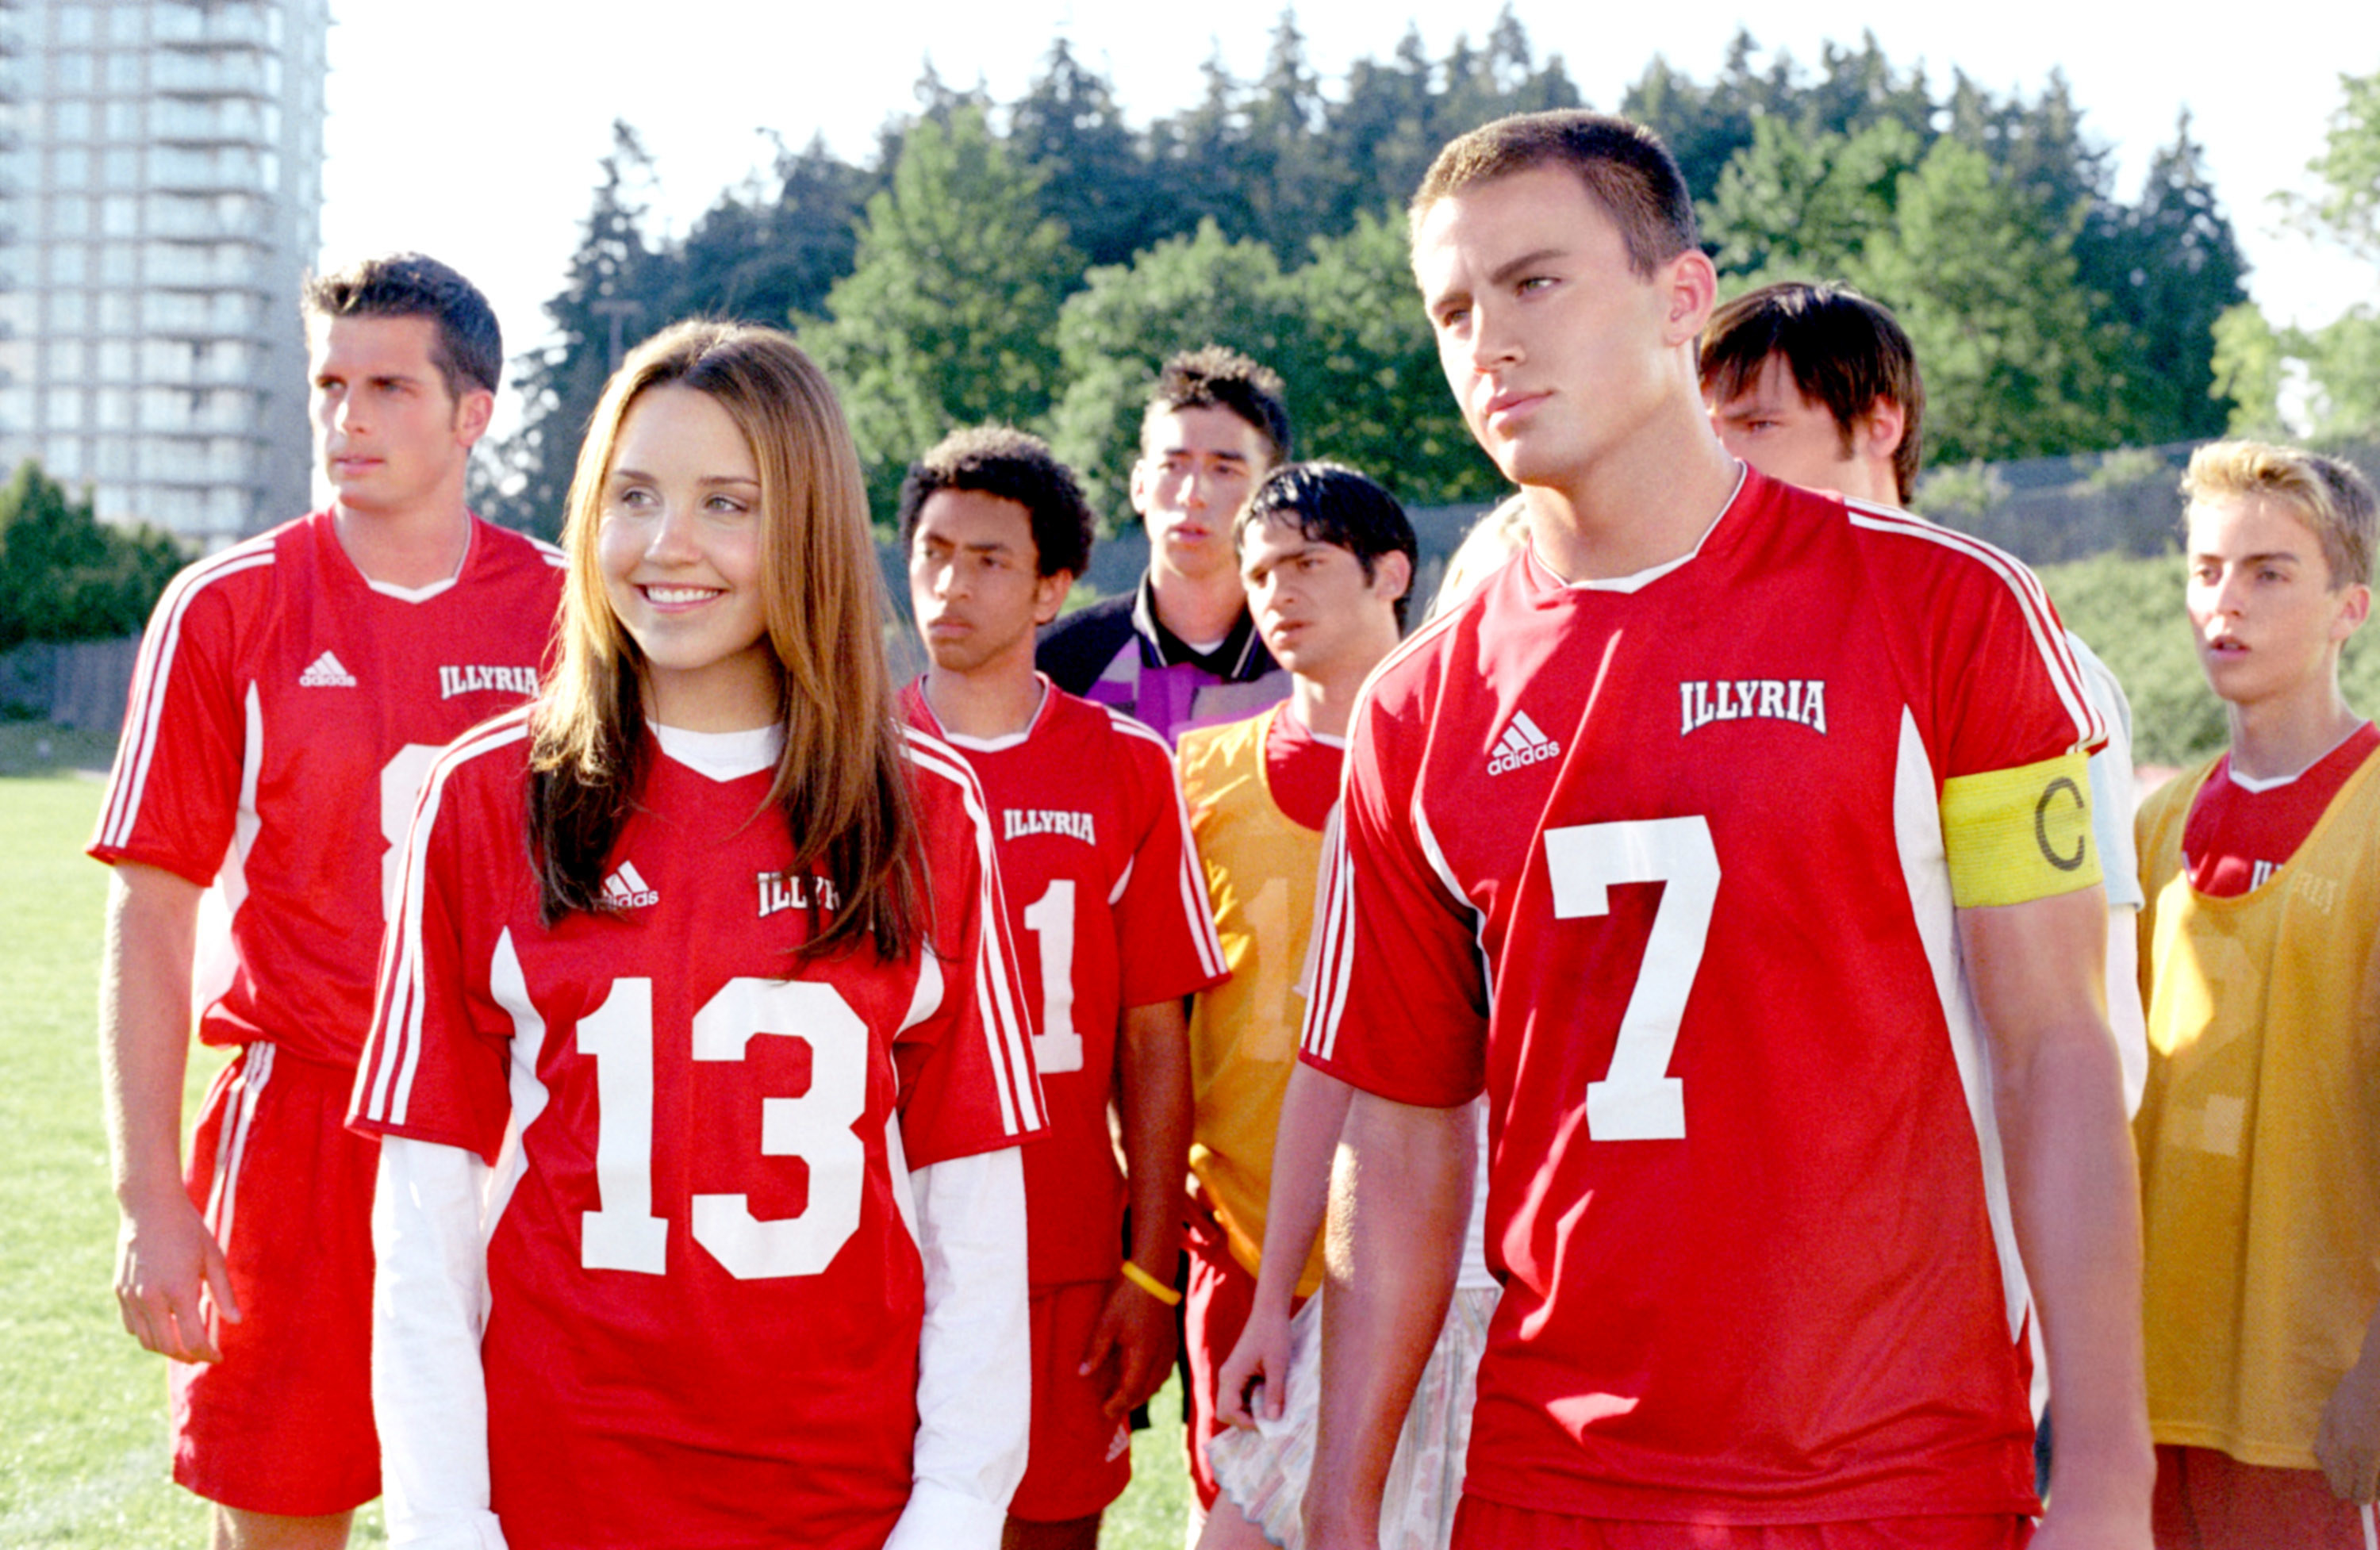 Amanda Bynes and Channing Tatum wearing soccer uniforms